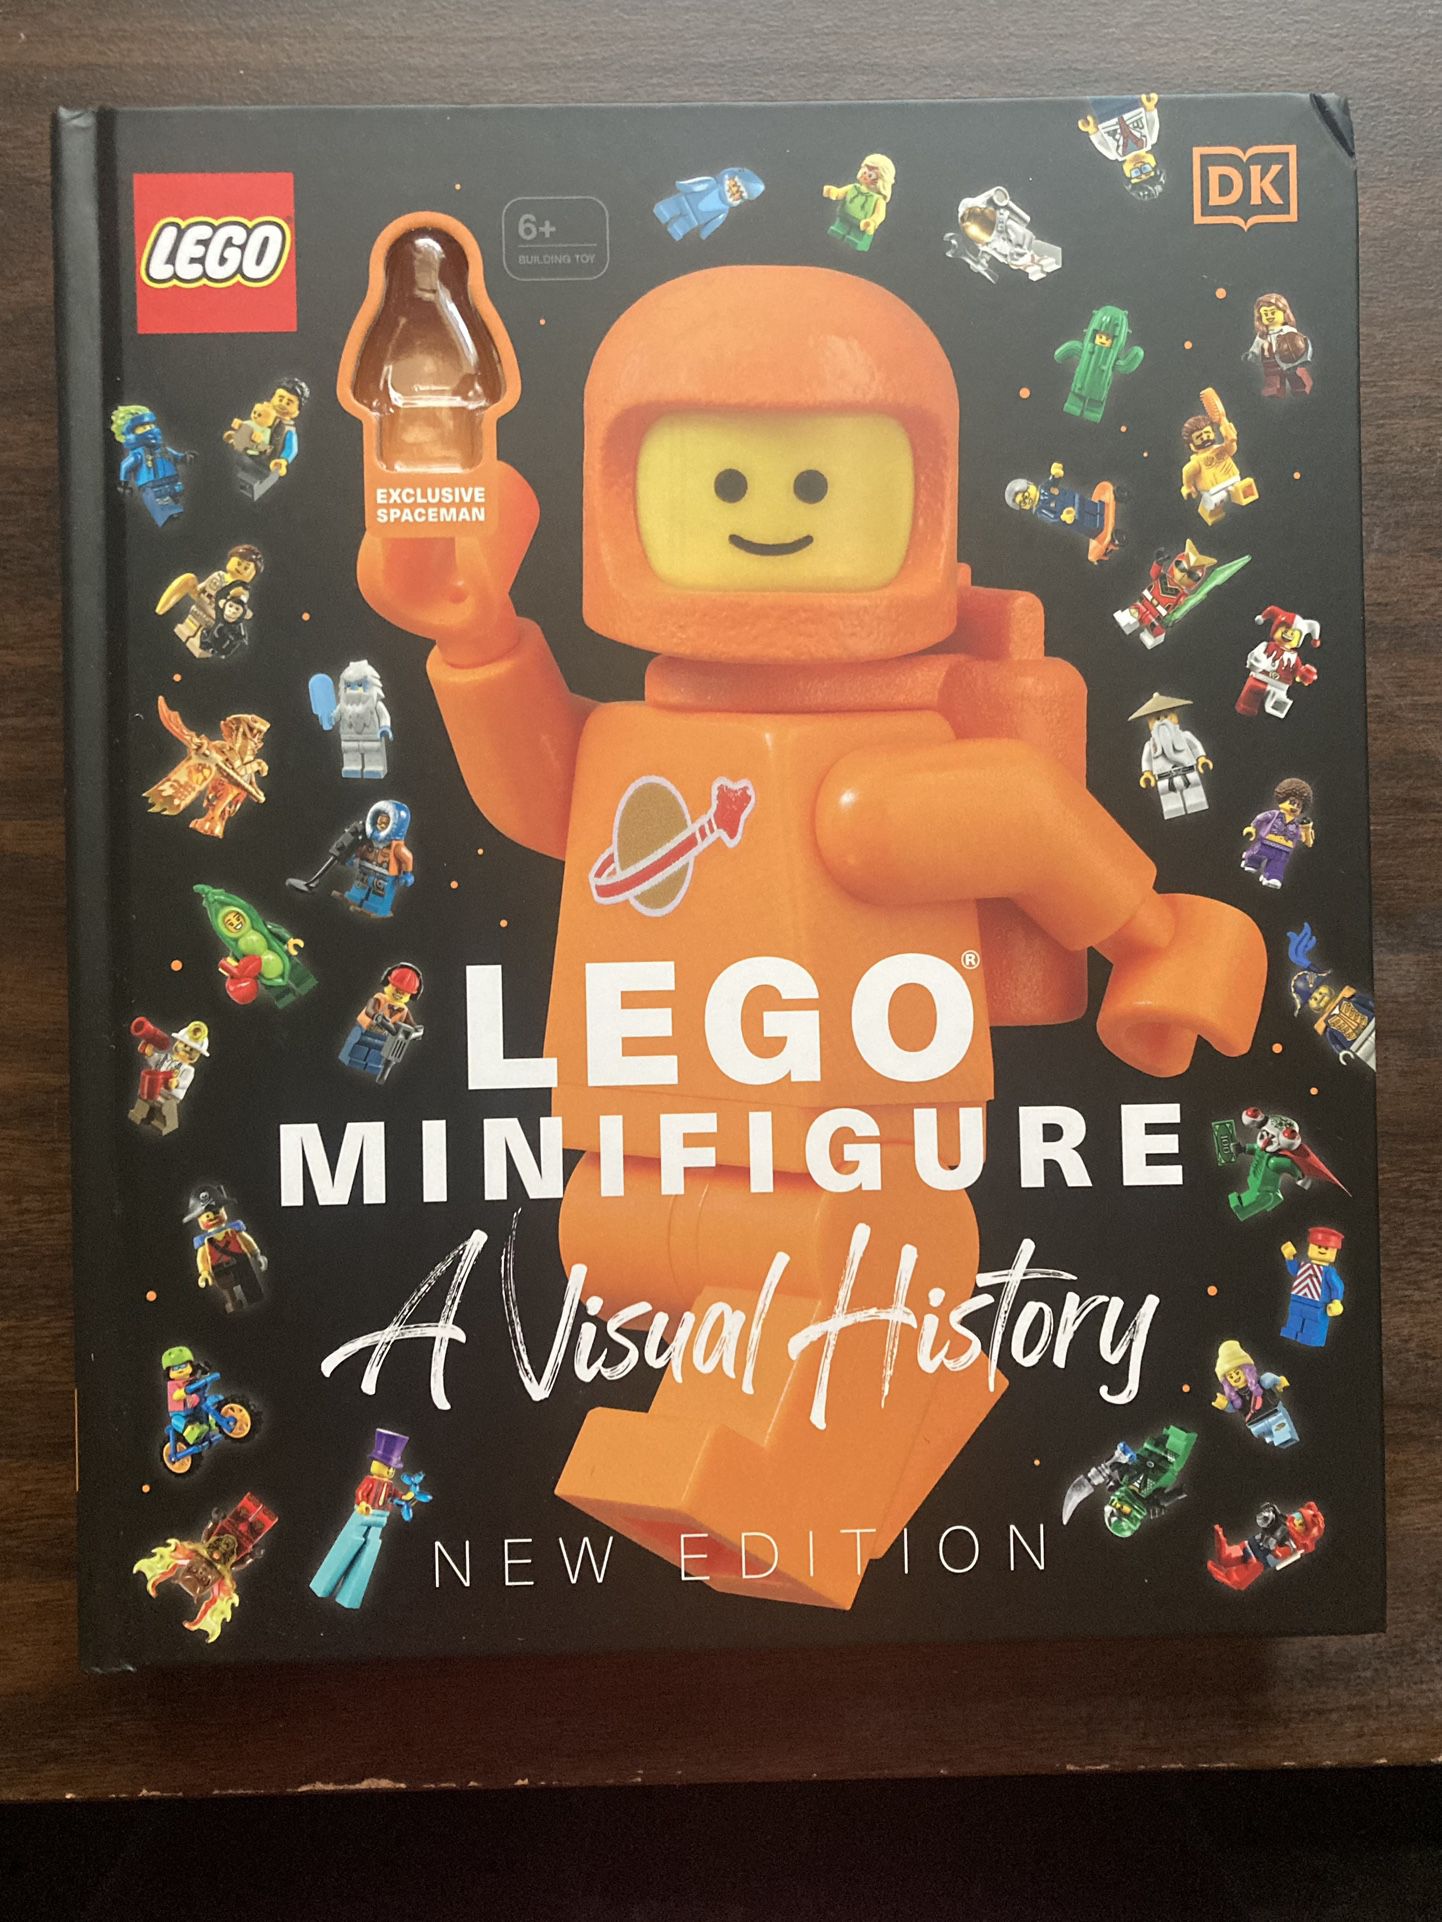 LEGO: Minifigure History Book